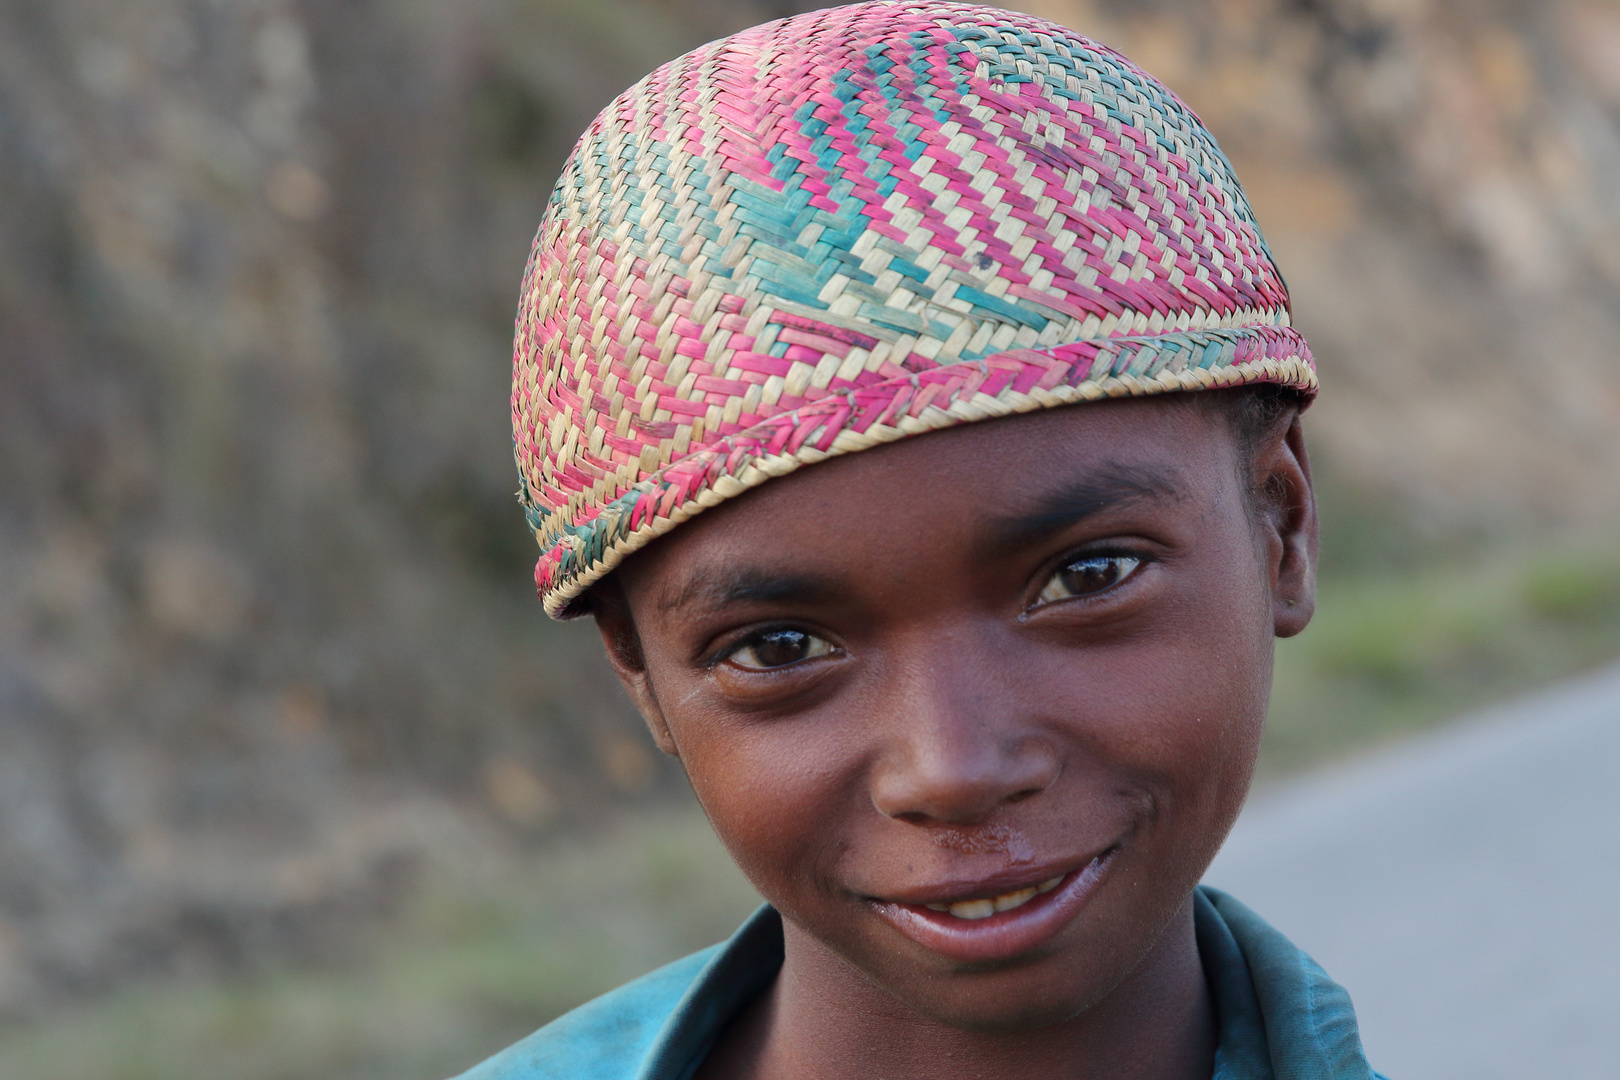 Porträt: Gesichter Madagaskars (20)